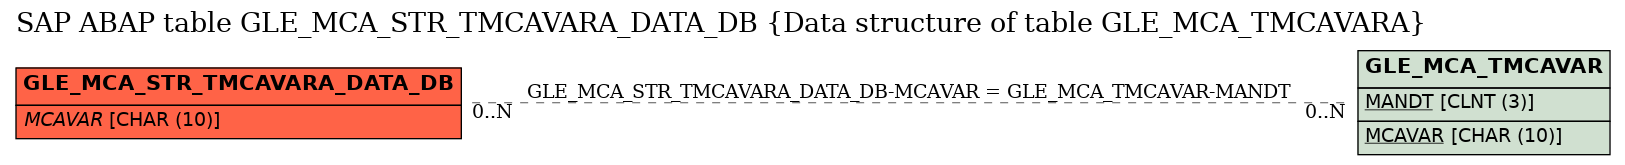 E-R Diagram for table GLE_MCA_STR_TMCAVARA_DATA_DB (Data structure of table GLE_MCA_TMCAVARA)